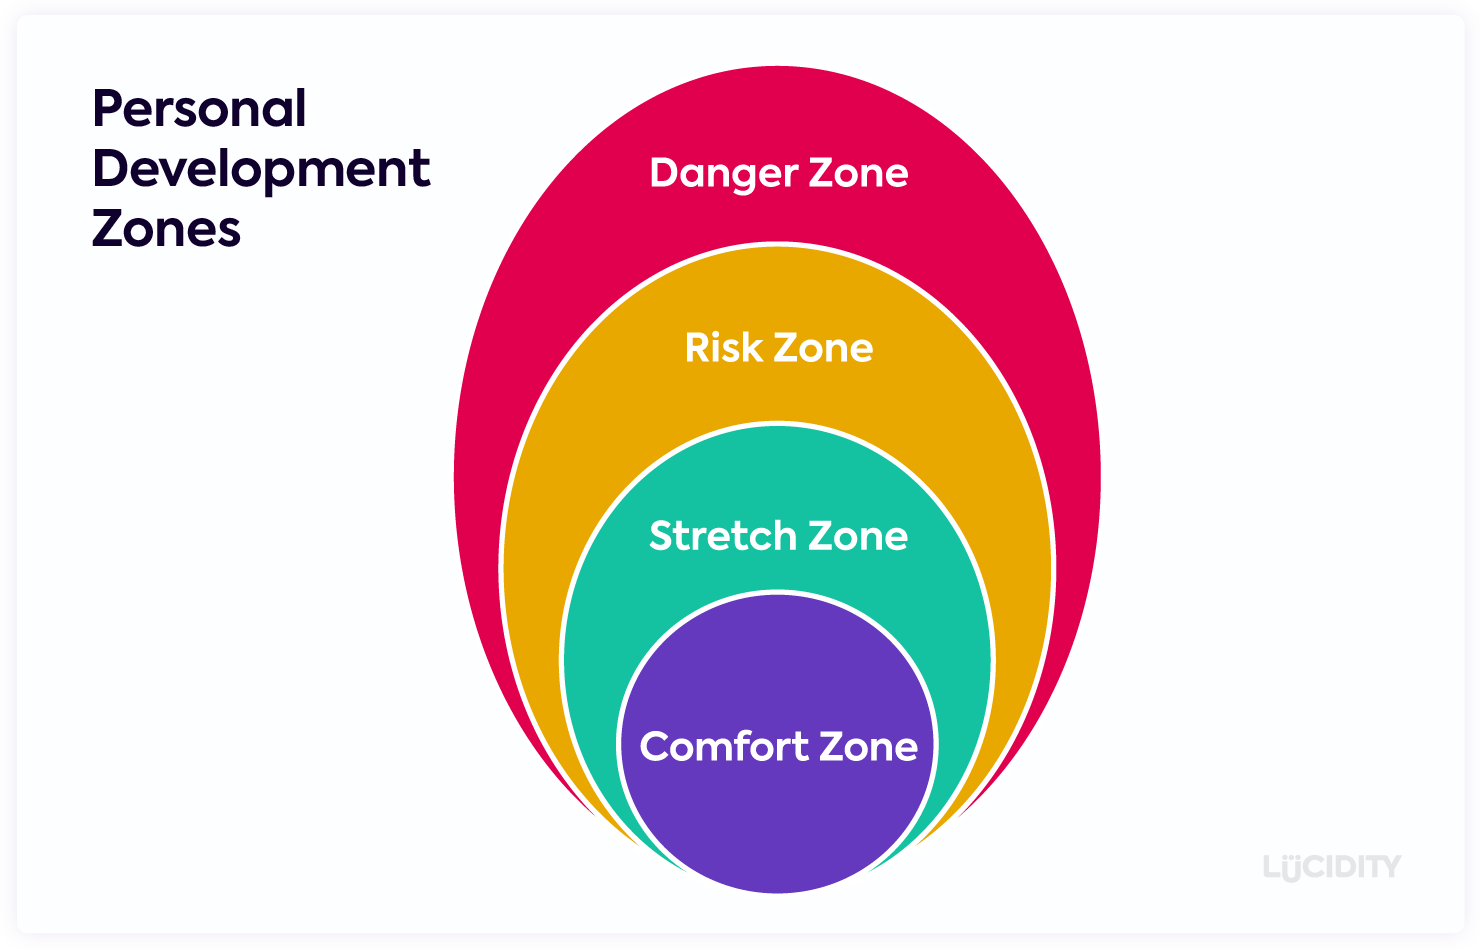 Four personal development zones for leadership development